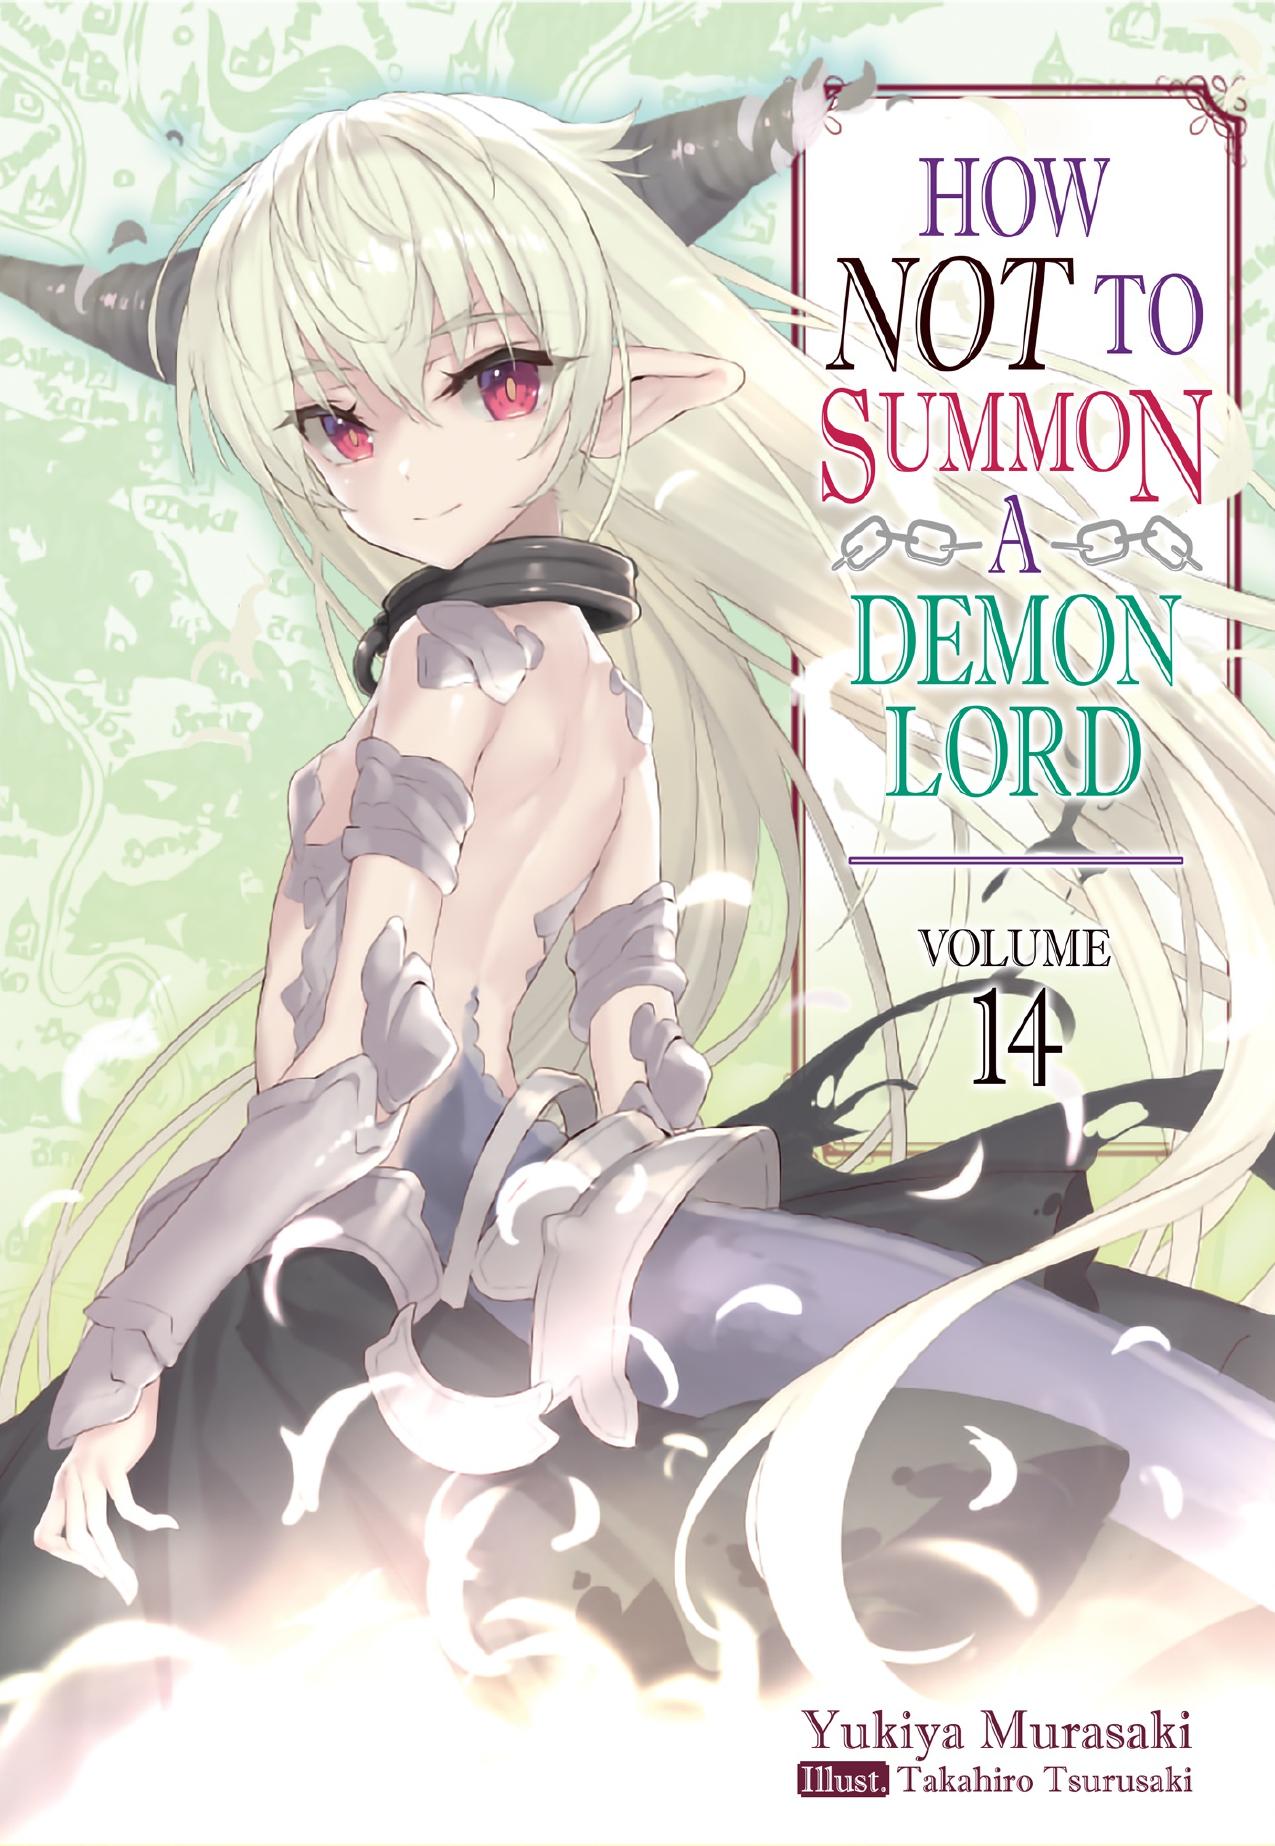 How NOT to Summon a Demon Lord: Volume 14 by Yukiya Murasaki